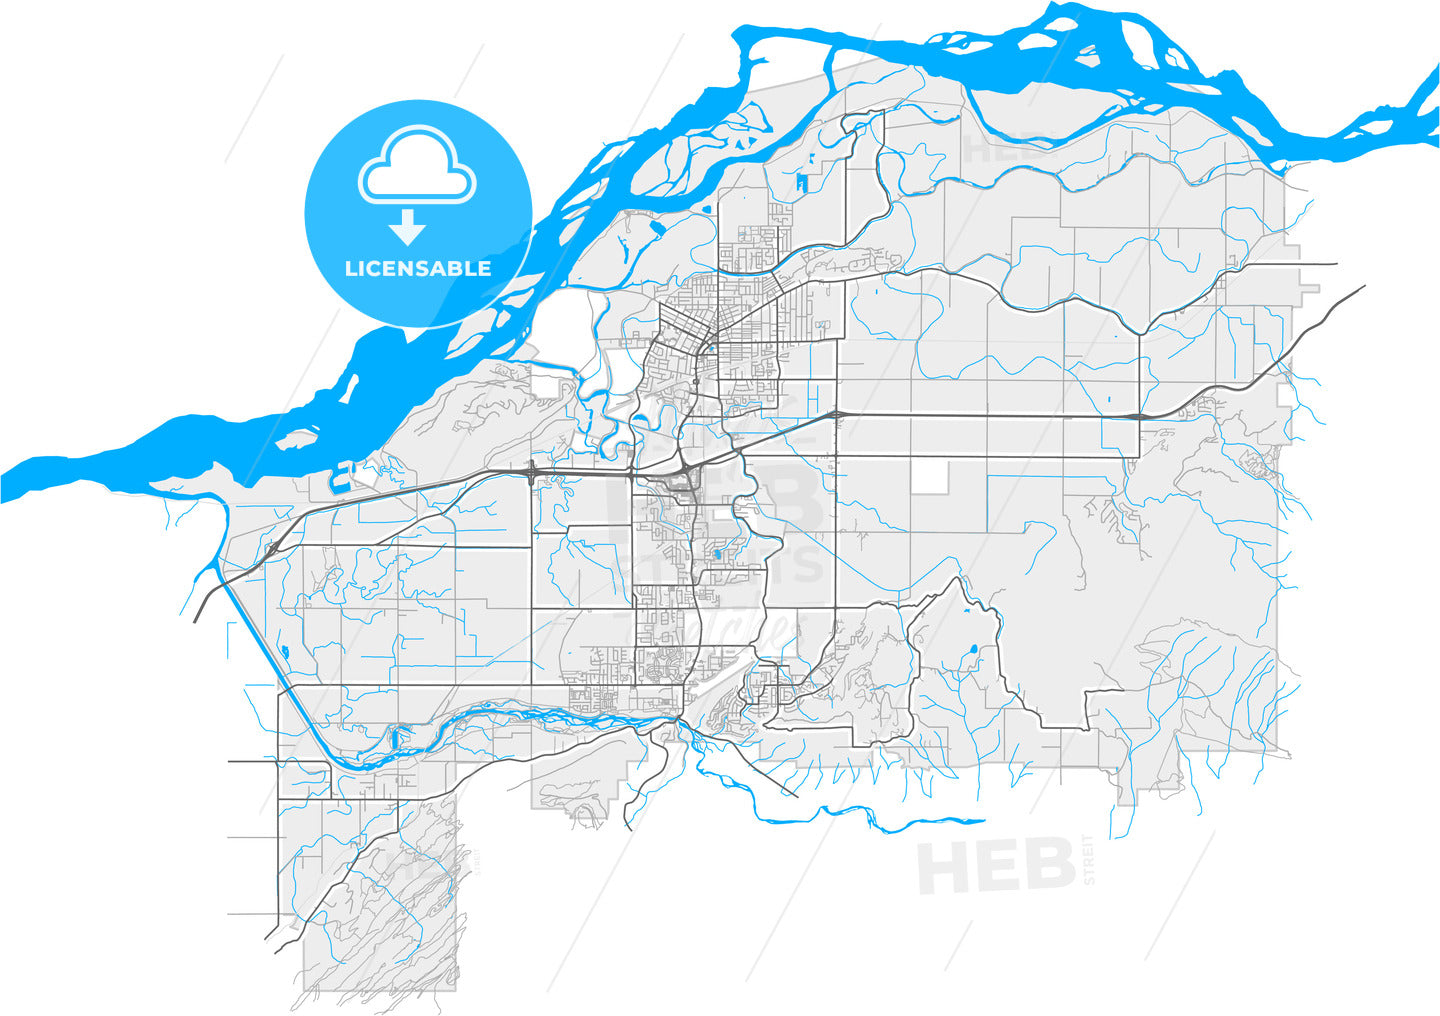 Chilliwack, British Columbia, Canada, high quality vector map